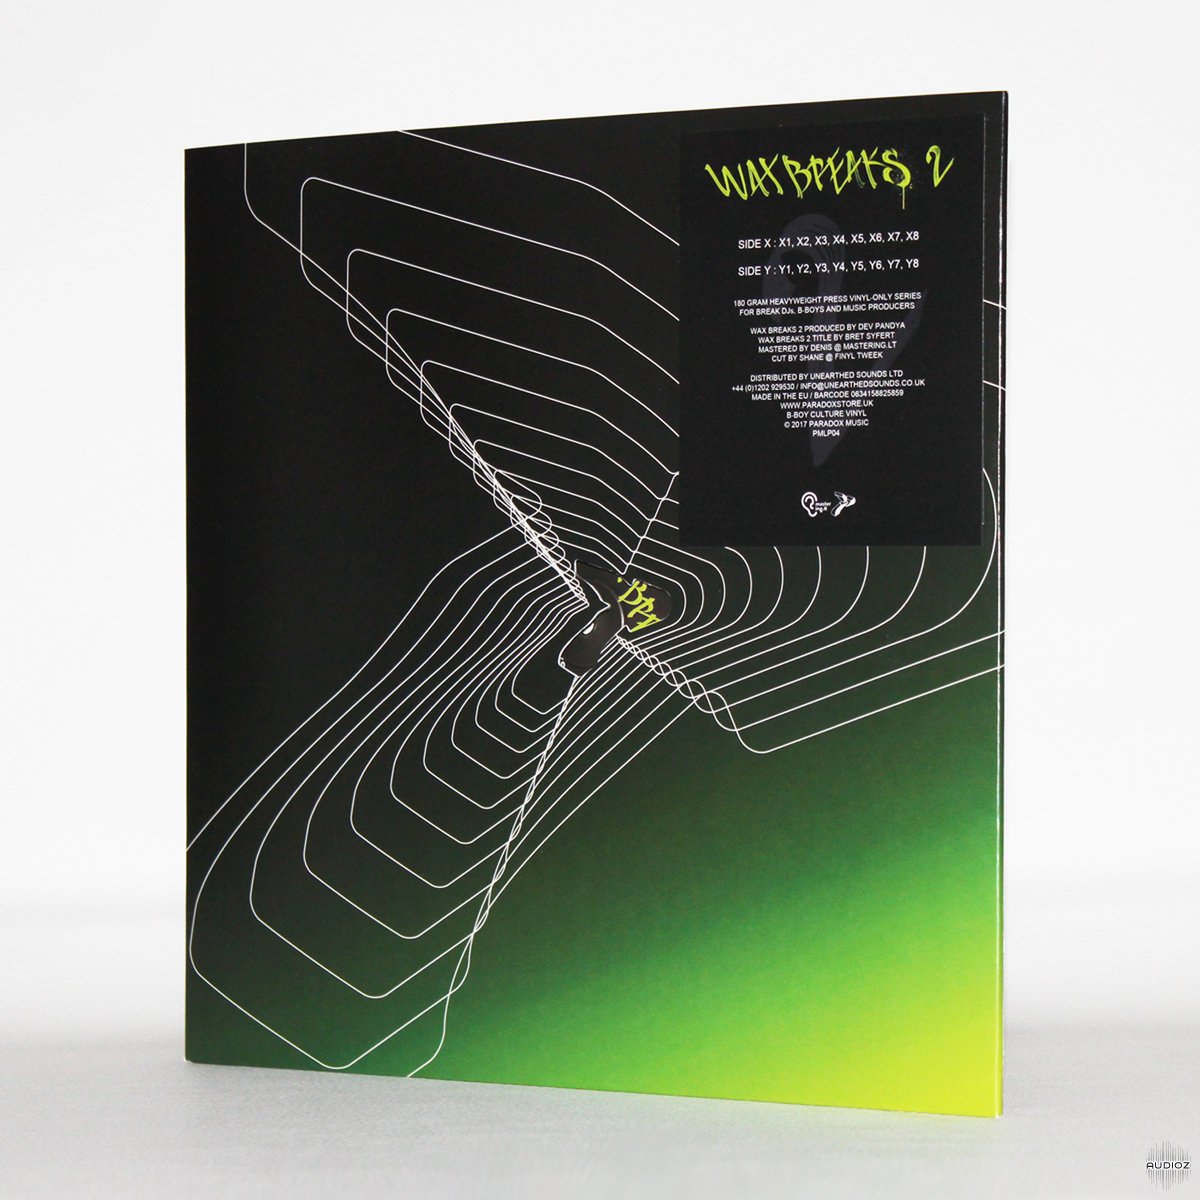 Download Paradox Music Wax Breaks 2 WAV (Vinyl Rip) » AudioZ